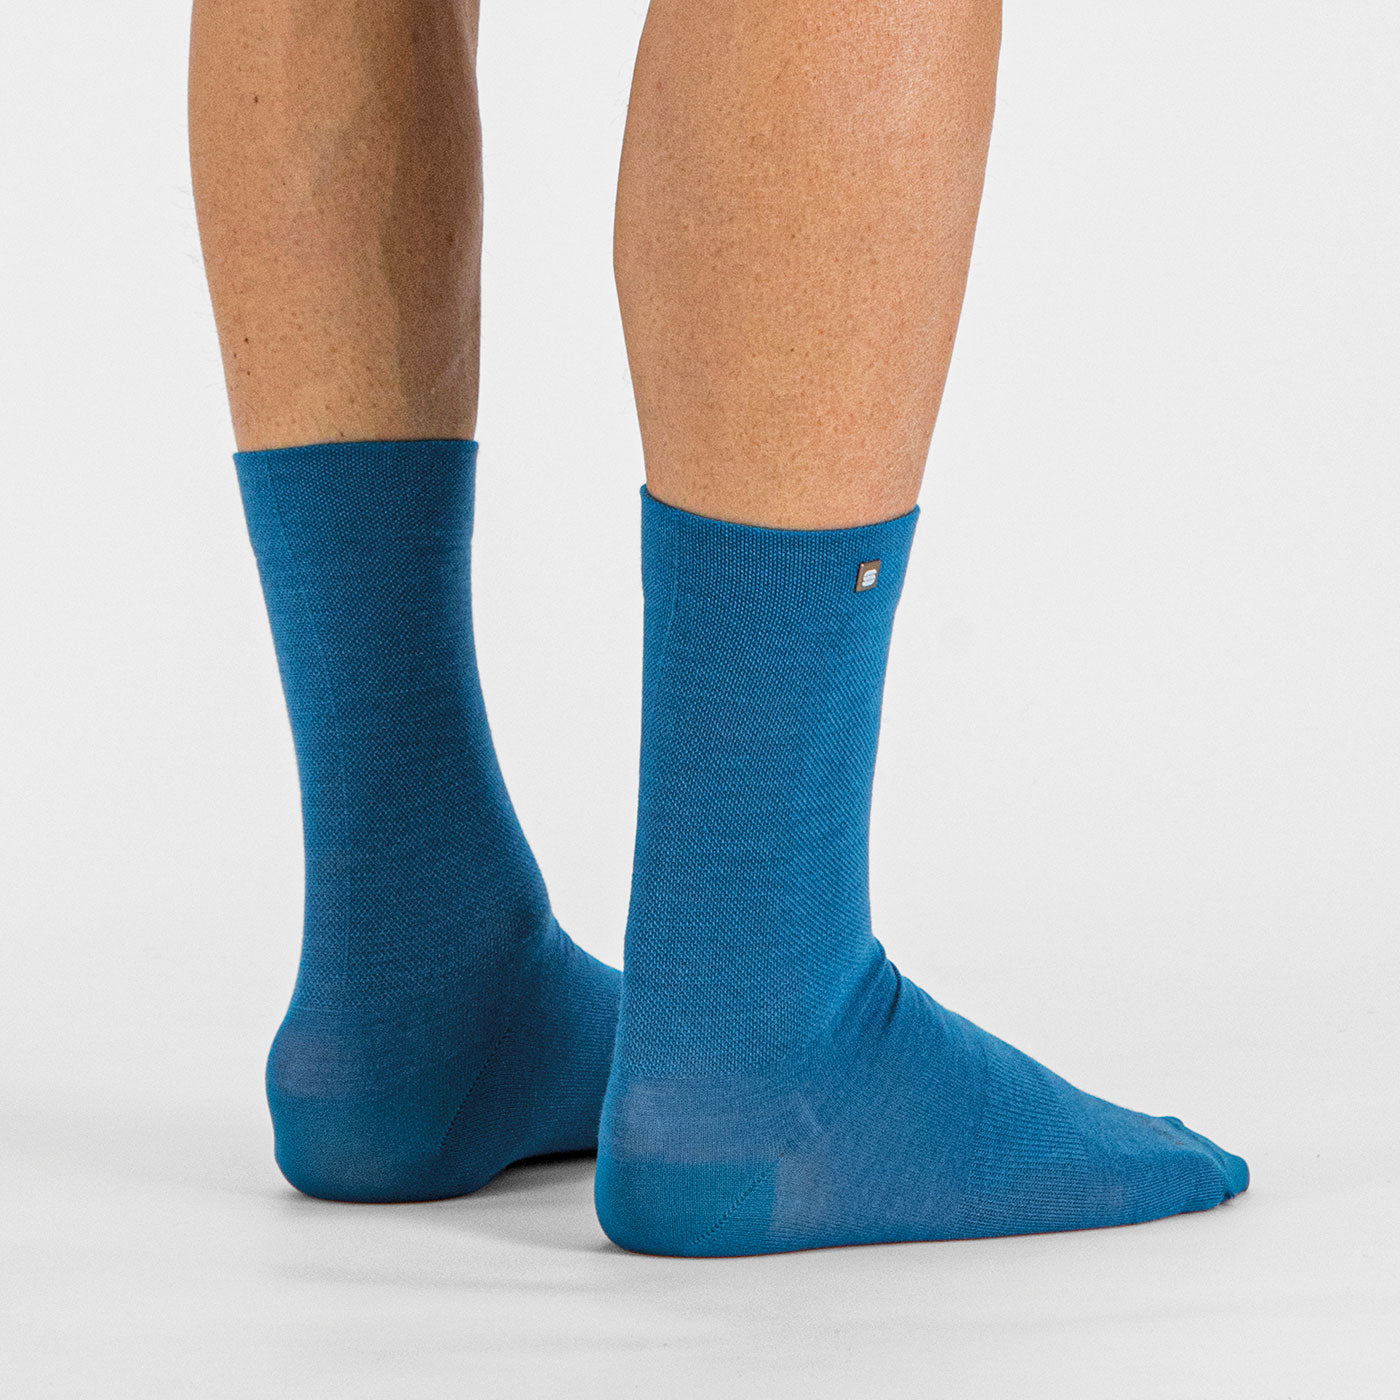 Sportful Matchy Wool socks - Light blue | All4cycling